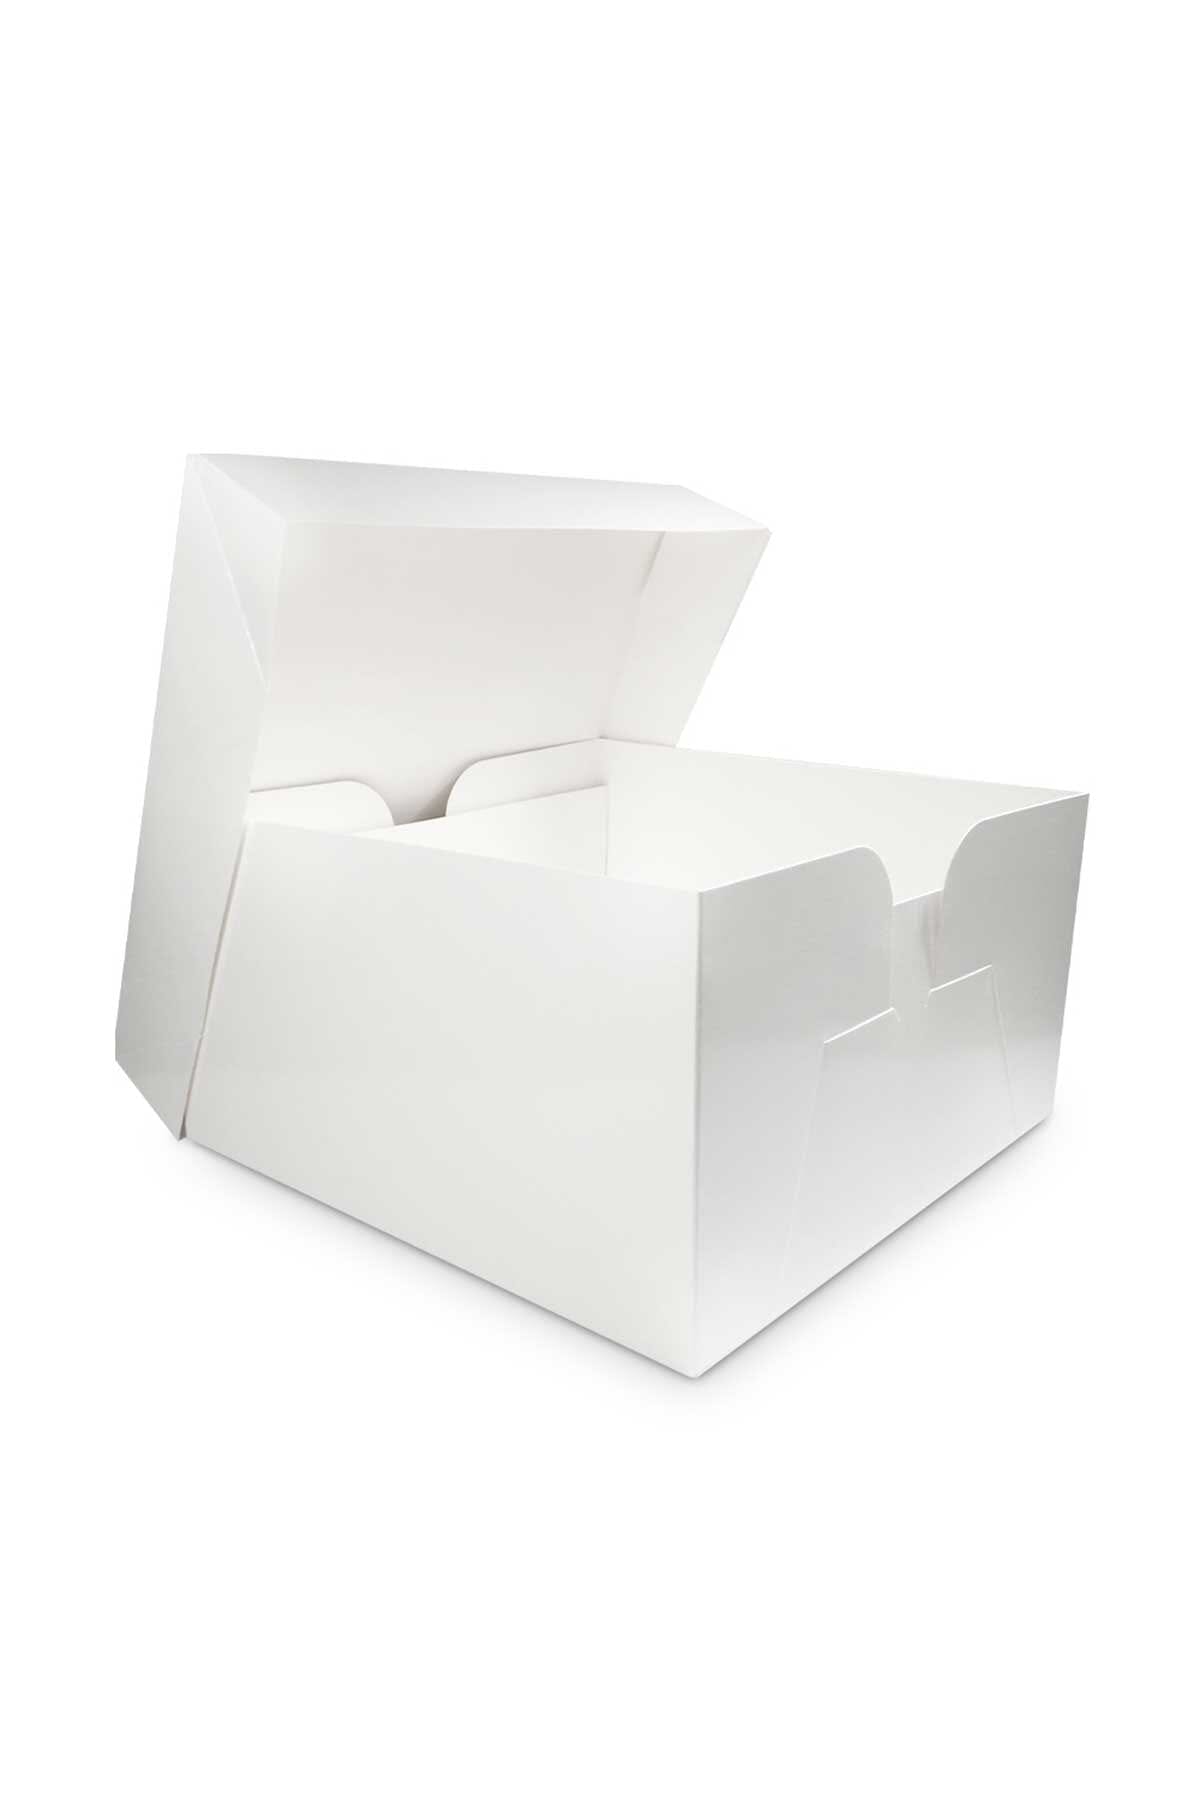 Single White Cake Box & Lid Cake Box Sprinkly 